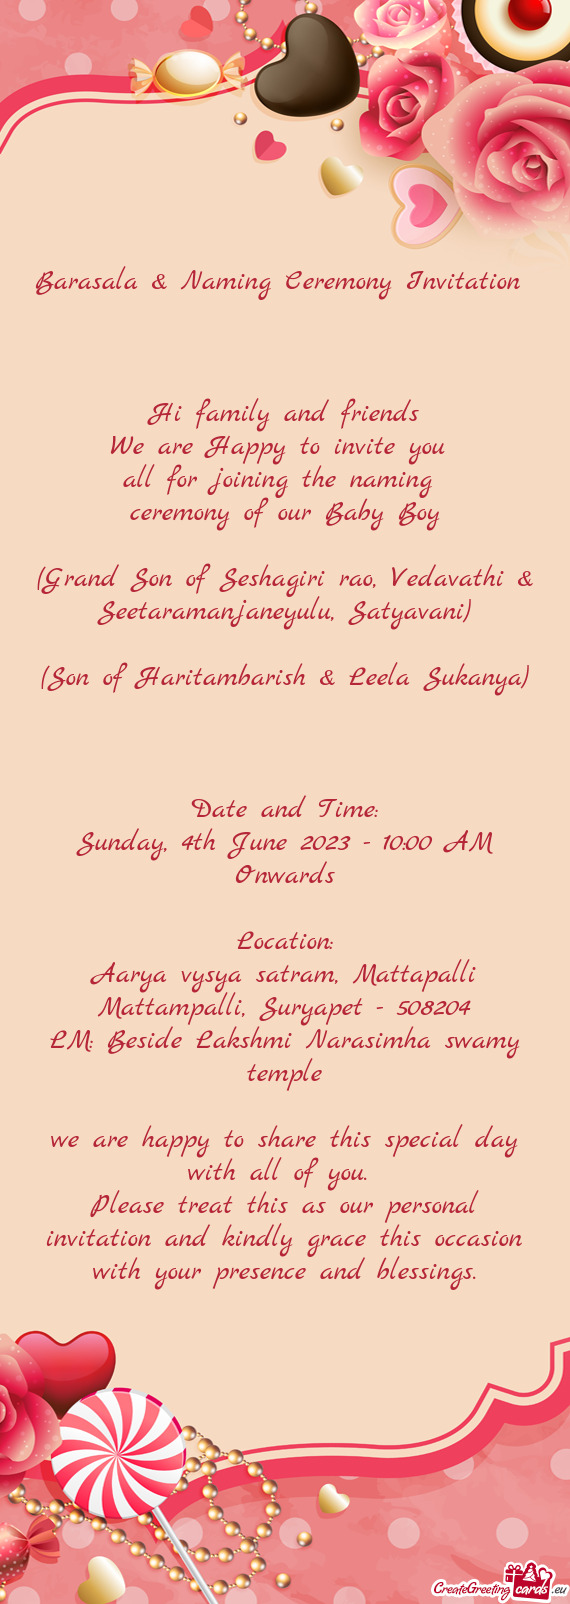 (Grand Son of Seshagiri rao, Vedavathi & Seetaramanjaneyulu, Satyavani)